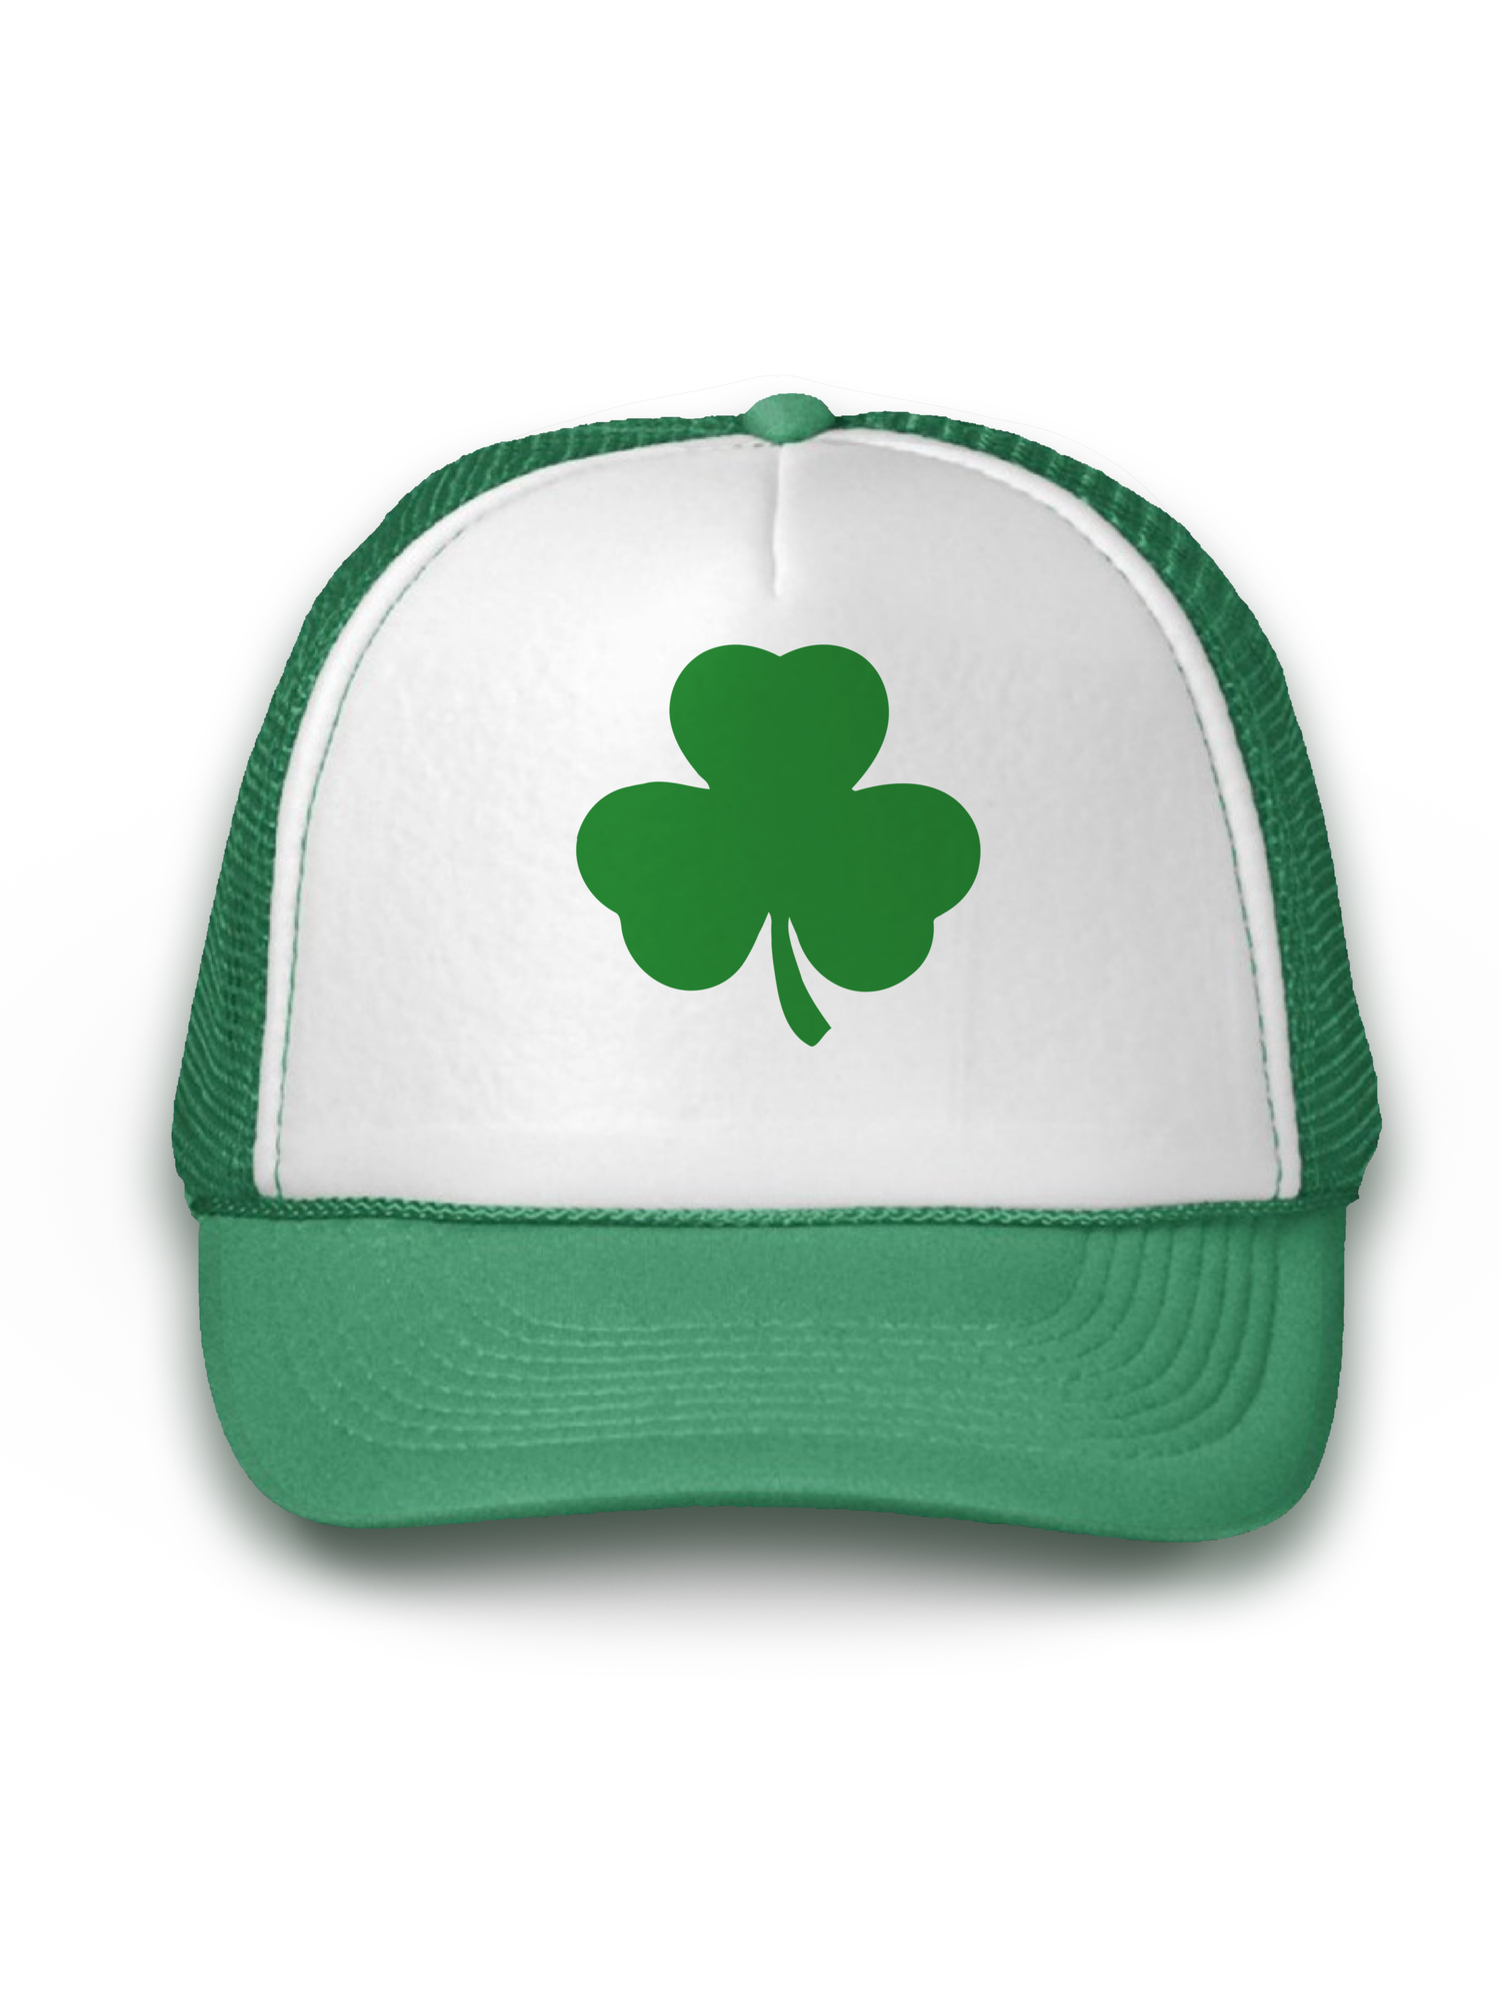 Awkward Styles St. Patrick's Day Baseball Cap Irish Clovers Party Trucker Green Hat Women's Men's St Patricks Day Top Hat St Patricks Day Green Hat Trucker Irish Green Baseball Hats - image 1 of 6